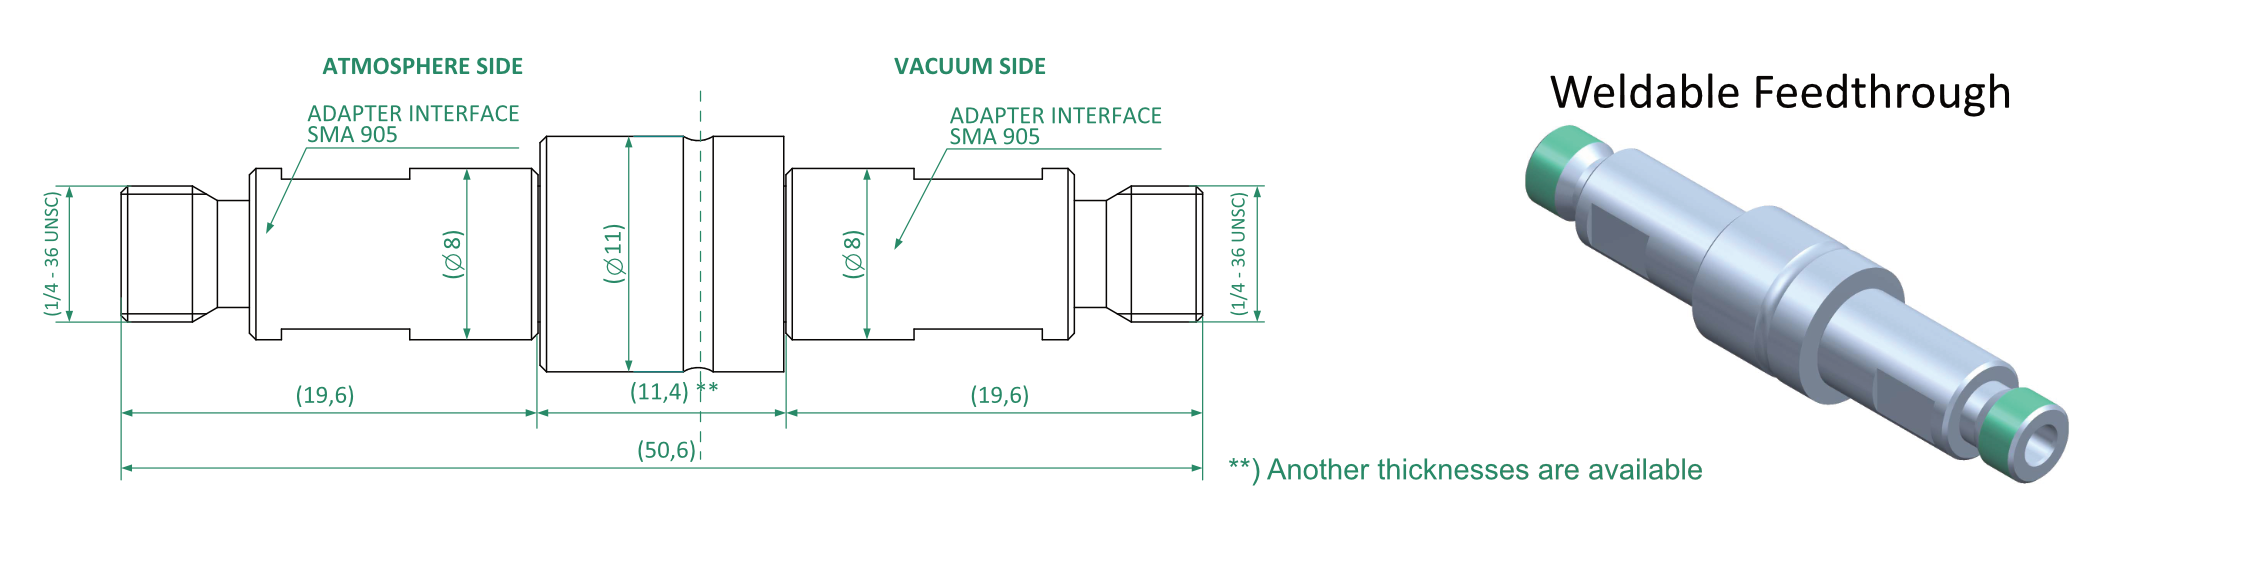 Vacuum Adapter Fiber Optic Feedthrough Without Flange